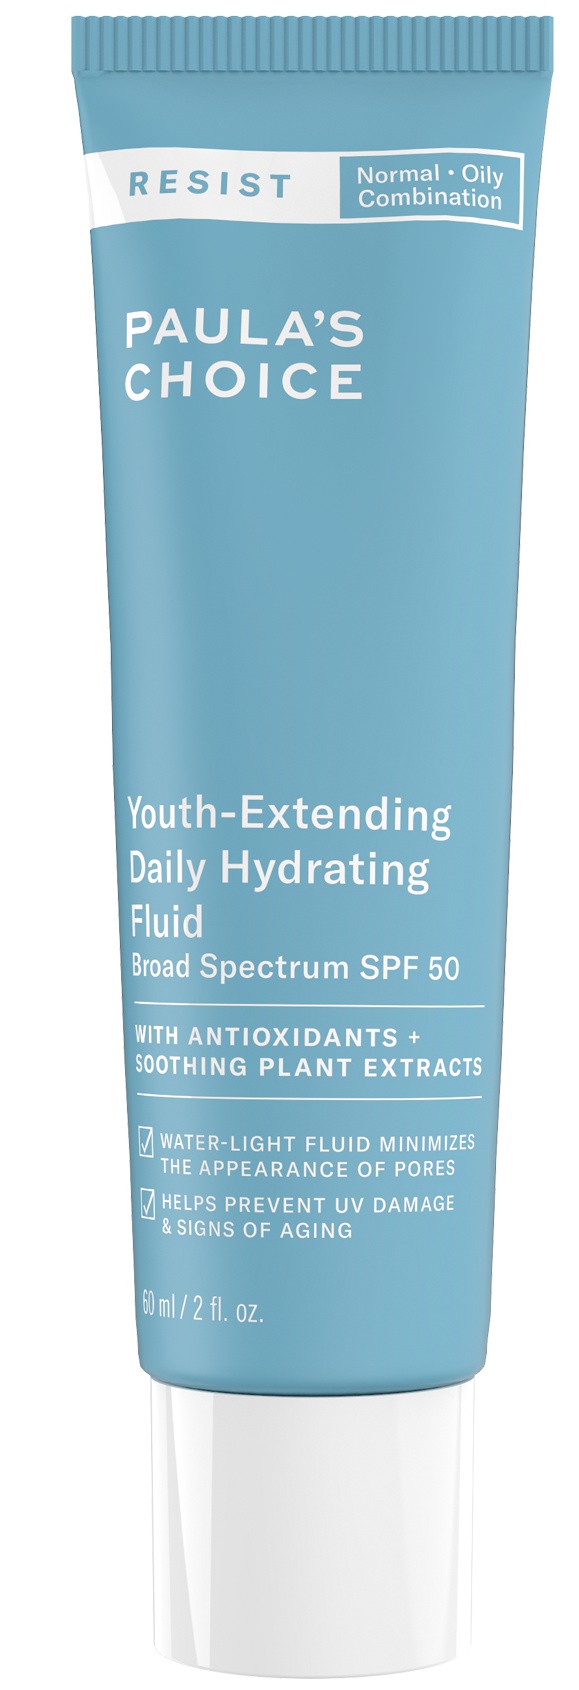 Paula's Choice Youth-extending Daily Hydrating Fluid SPF 15